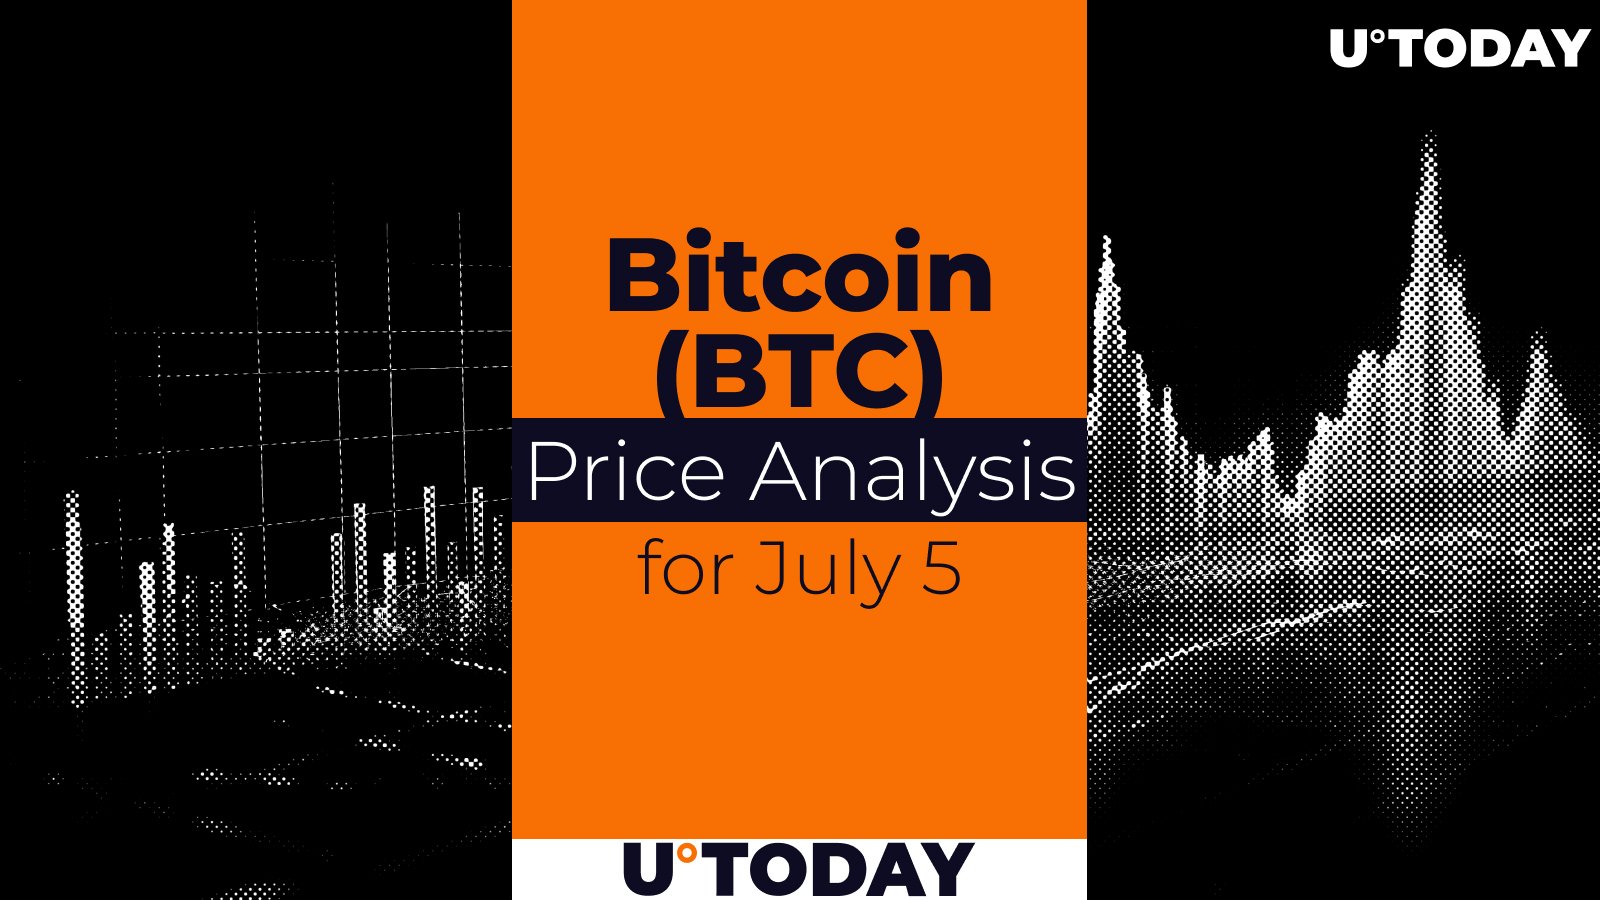 Bitcoin (BTC) Price Prediction for July 5